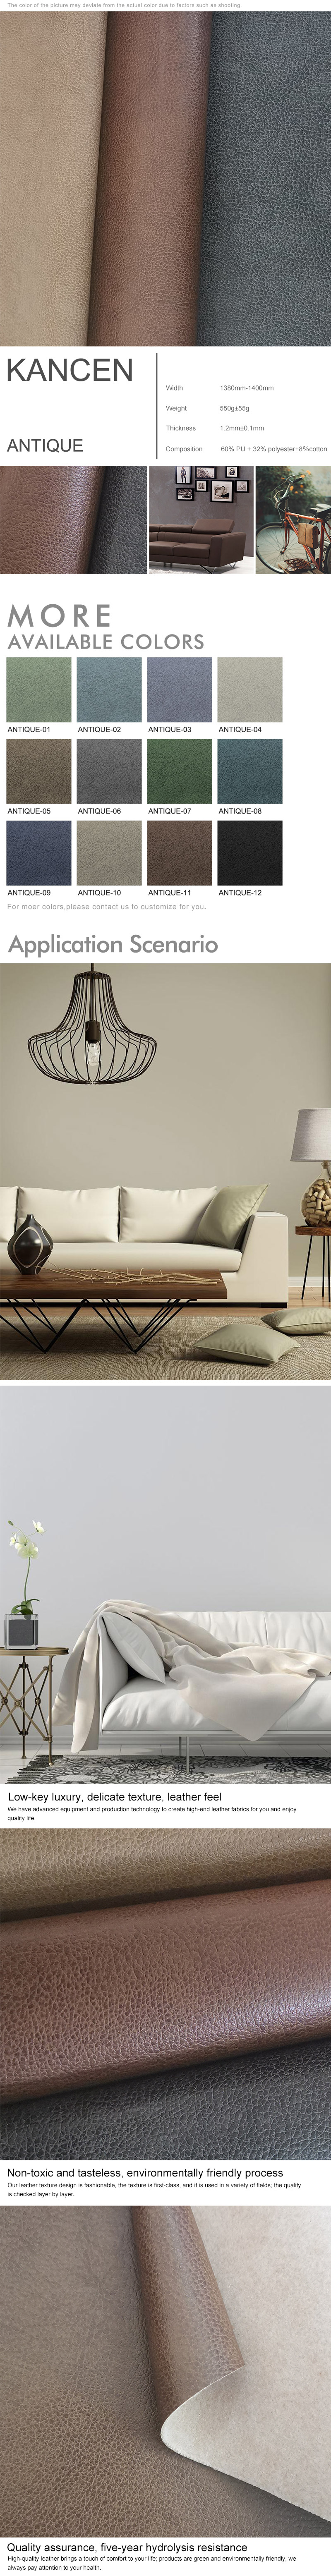 Commercial Sofa Leather OEM - KANCEN